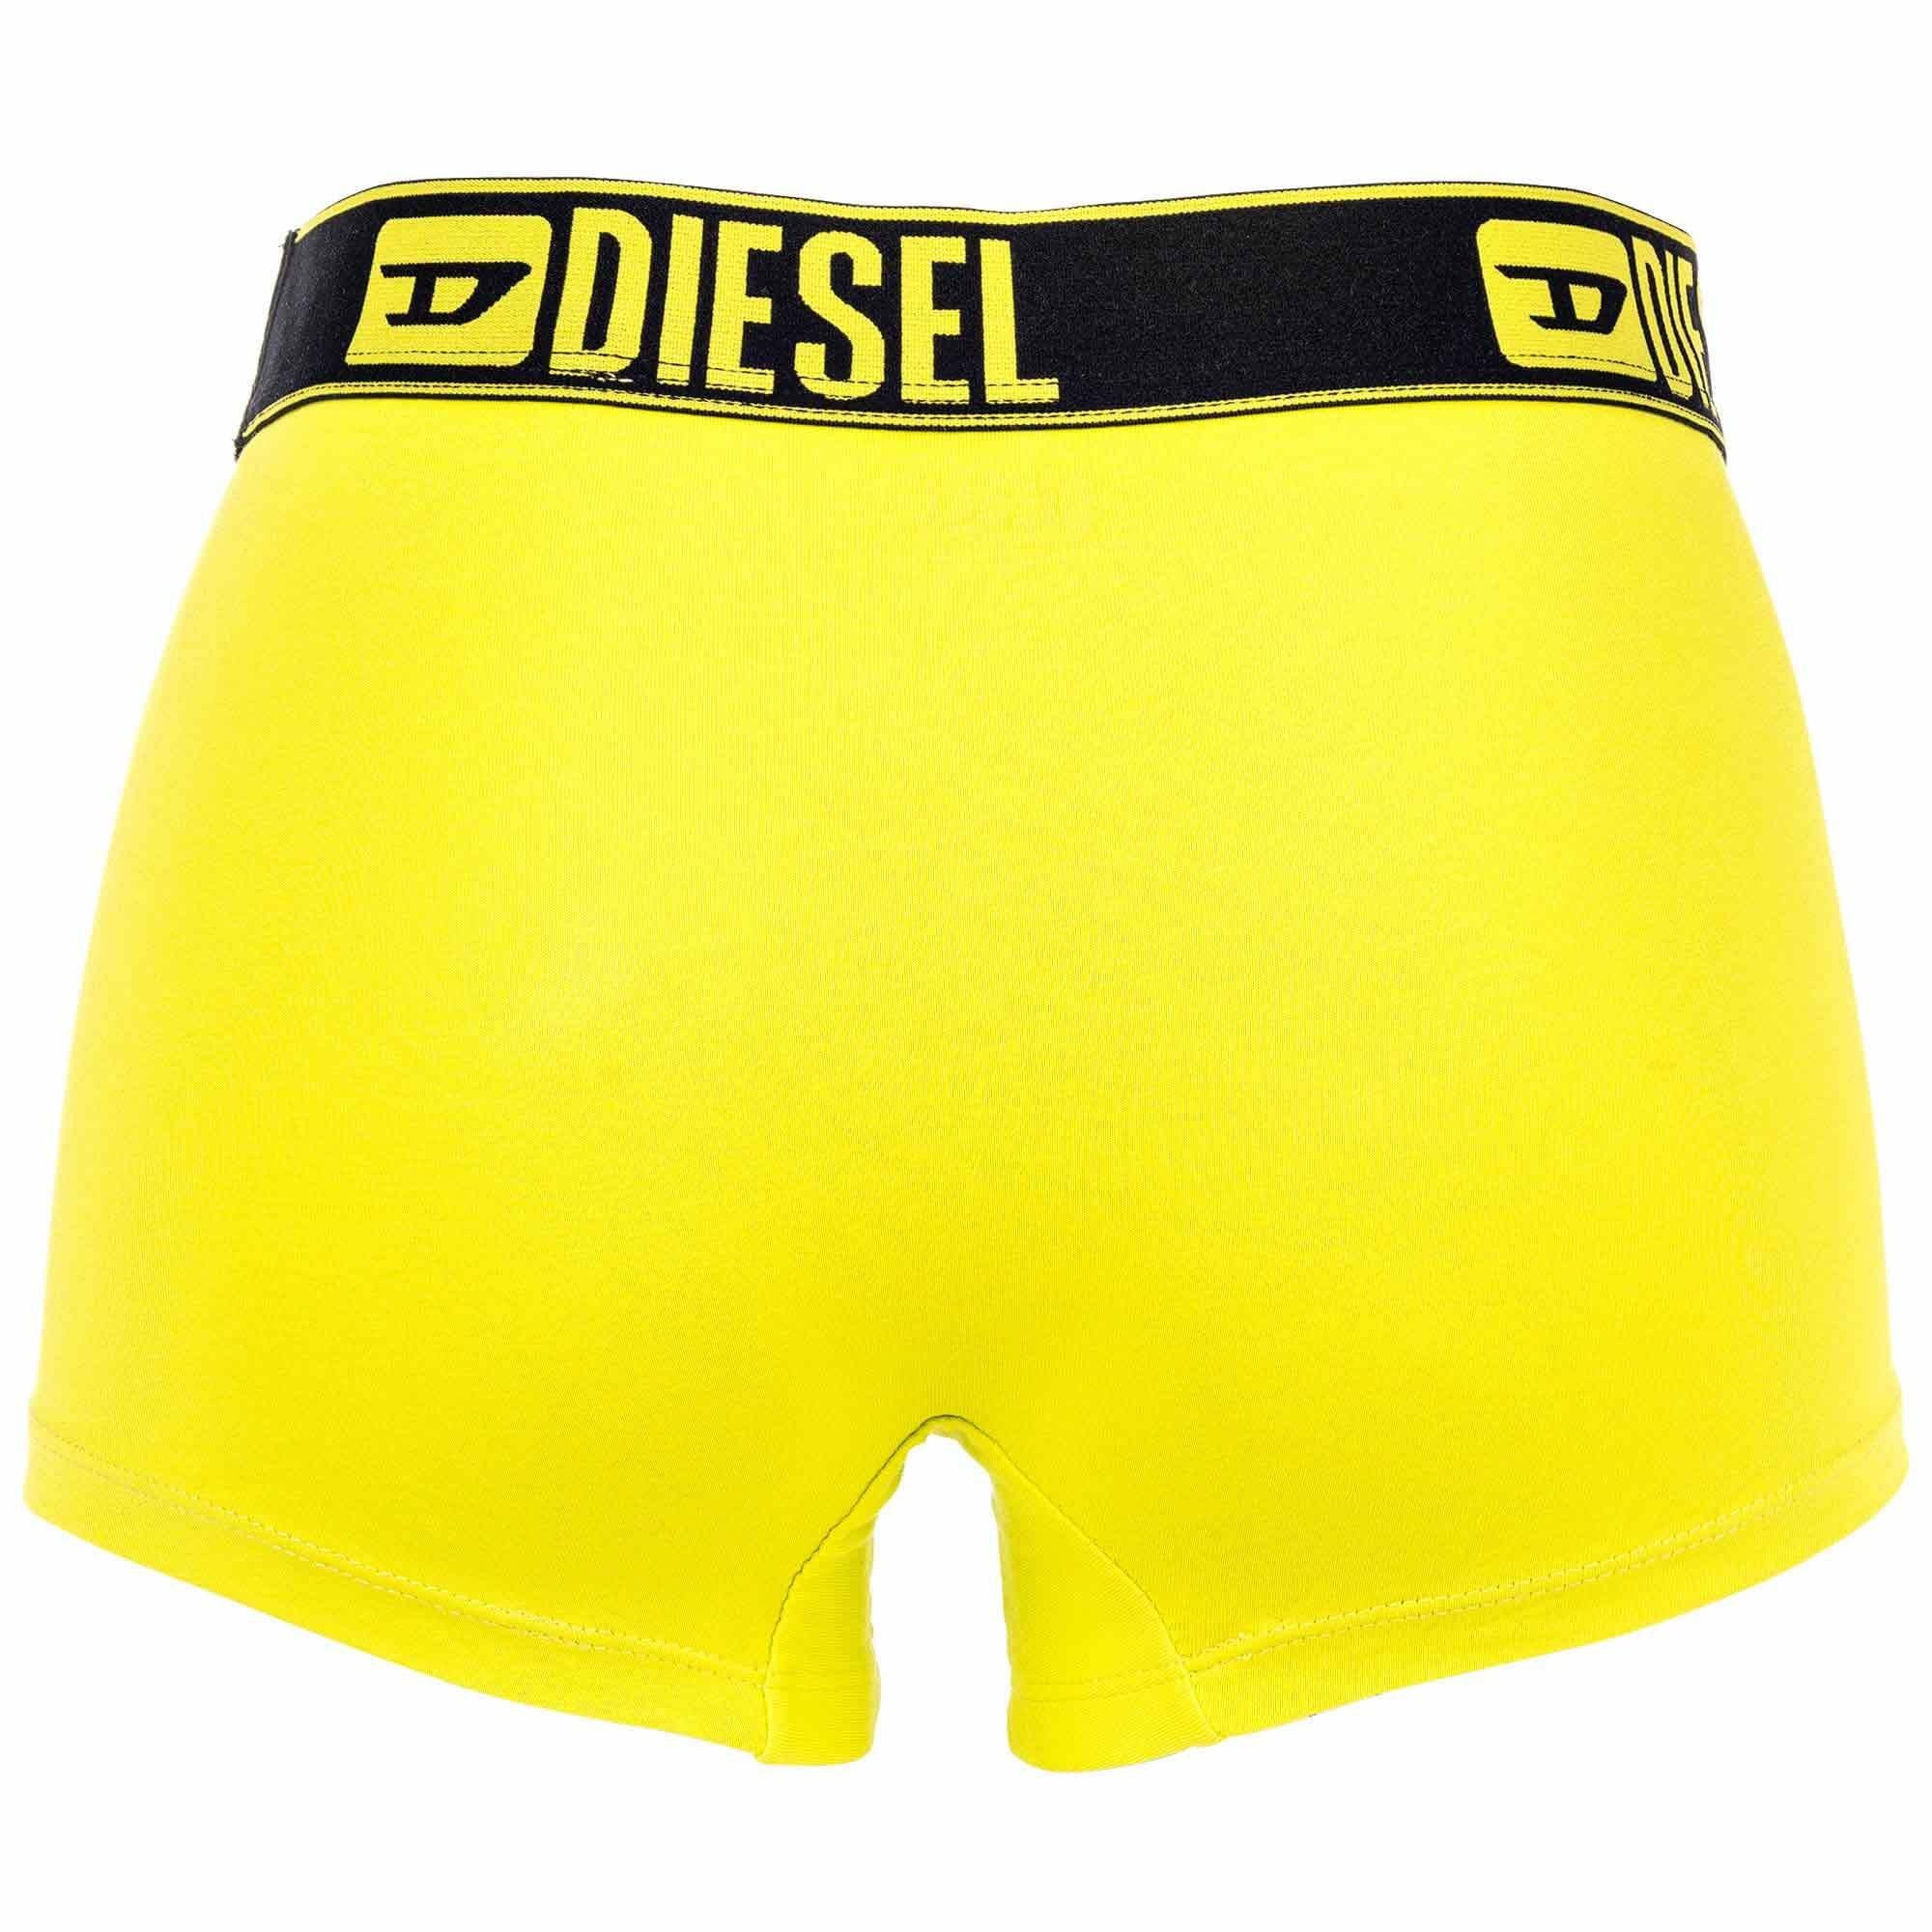 Diesel Boxer Herren Boxershorts, 3er Pack Türkis/Gelb/Schwarz 